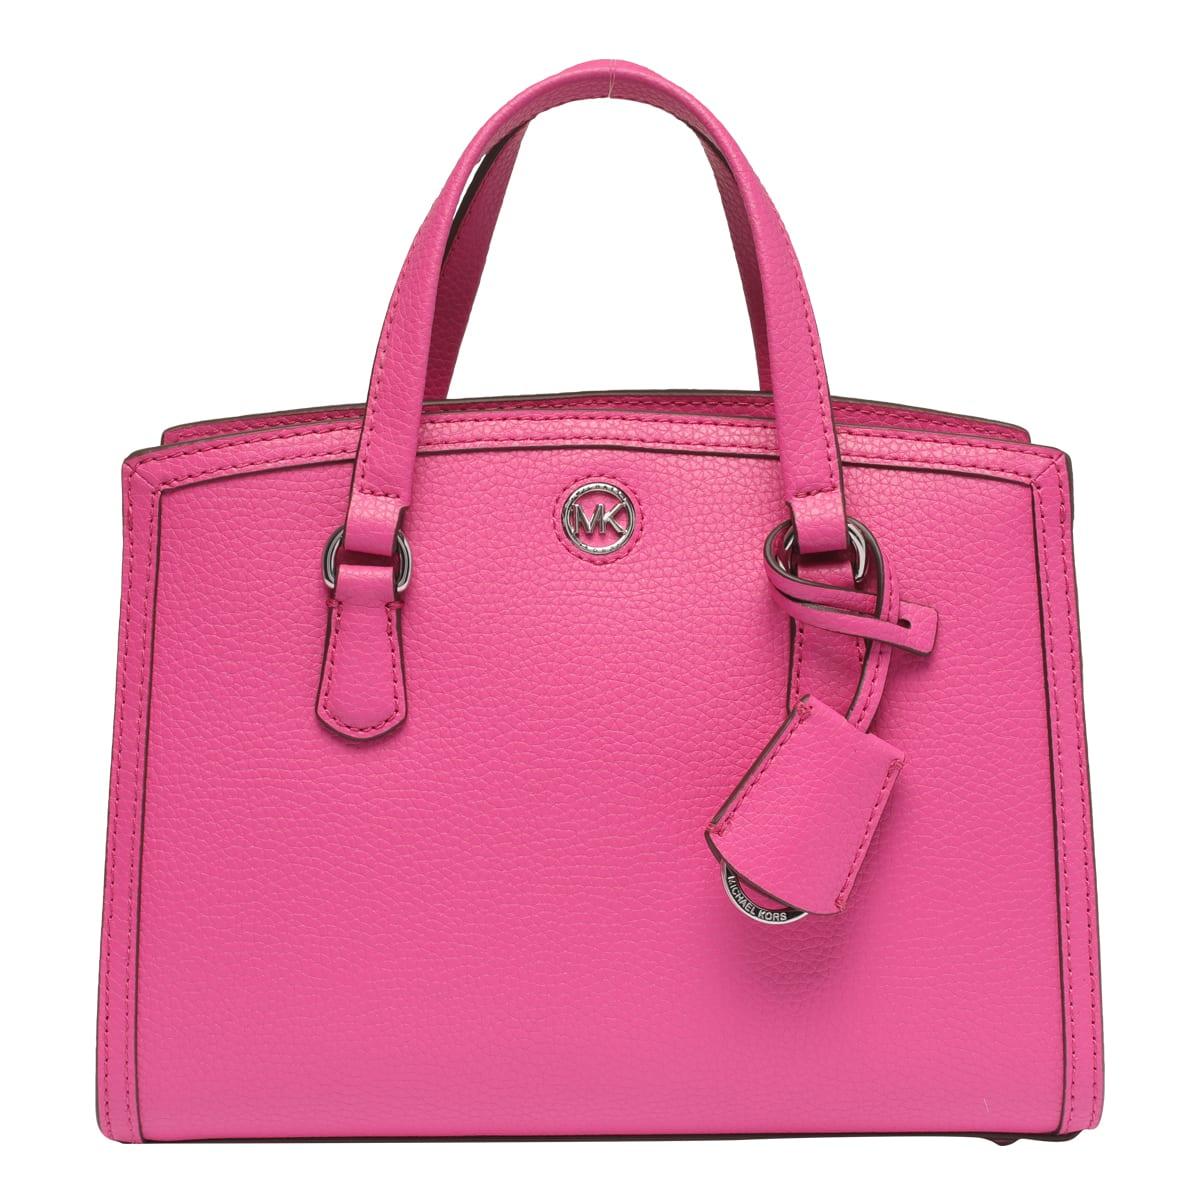 Michael Kors Chantal Hand Bag in Pink | Lyst